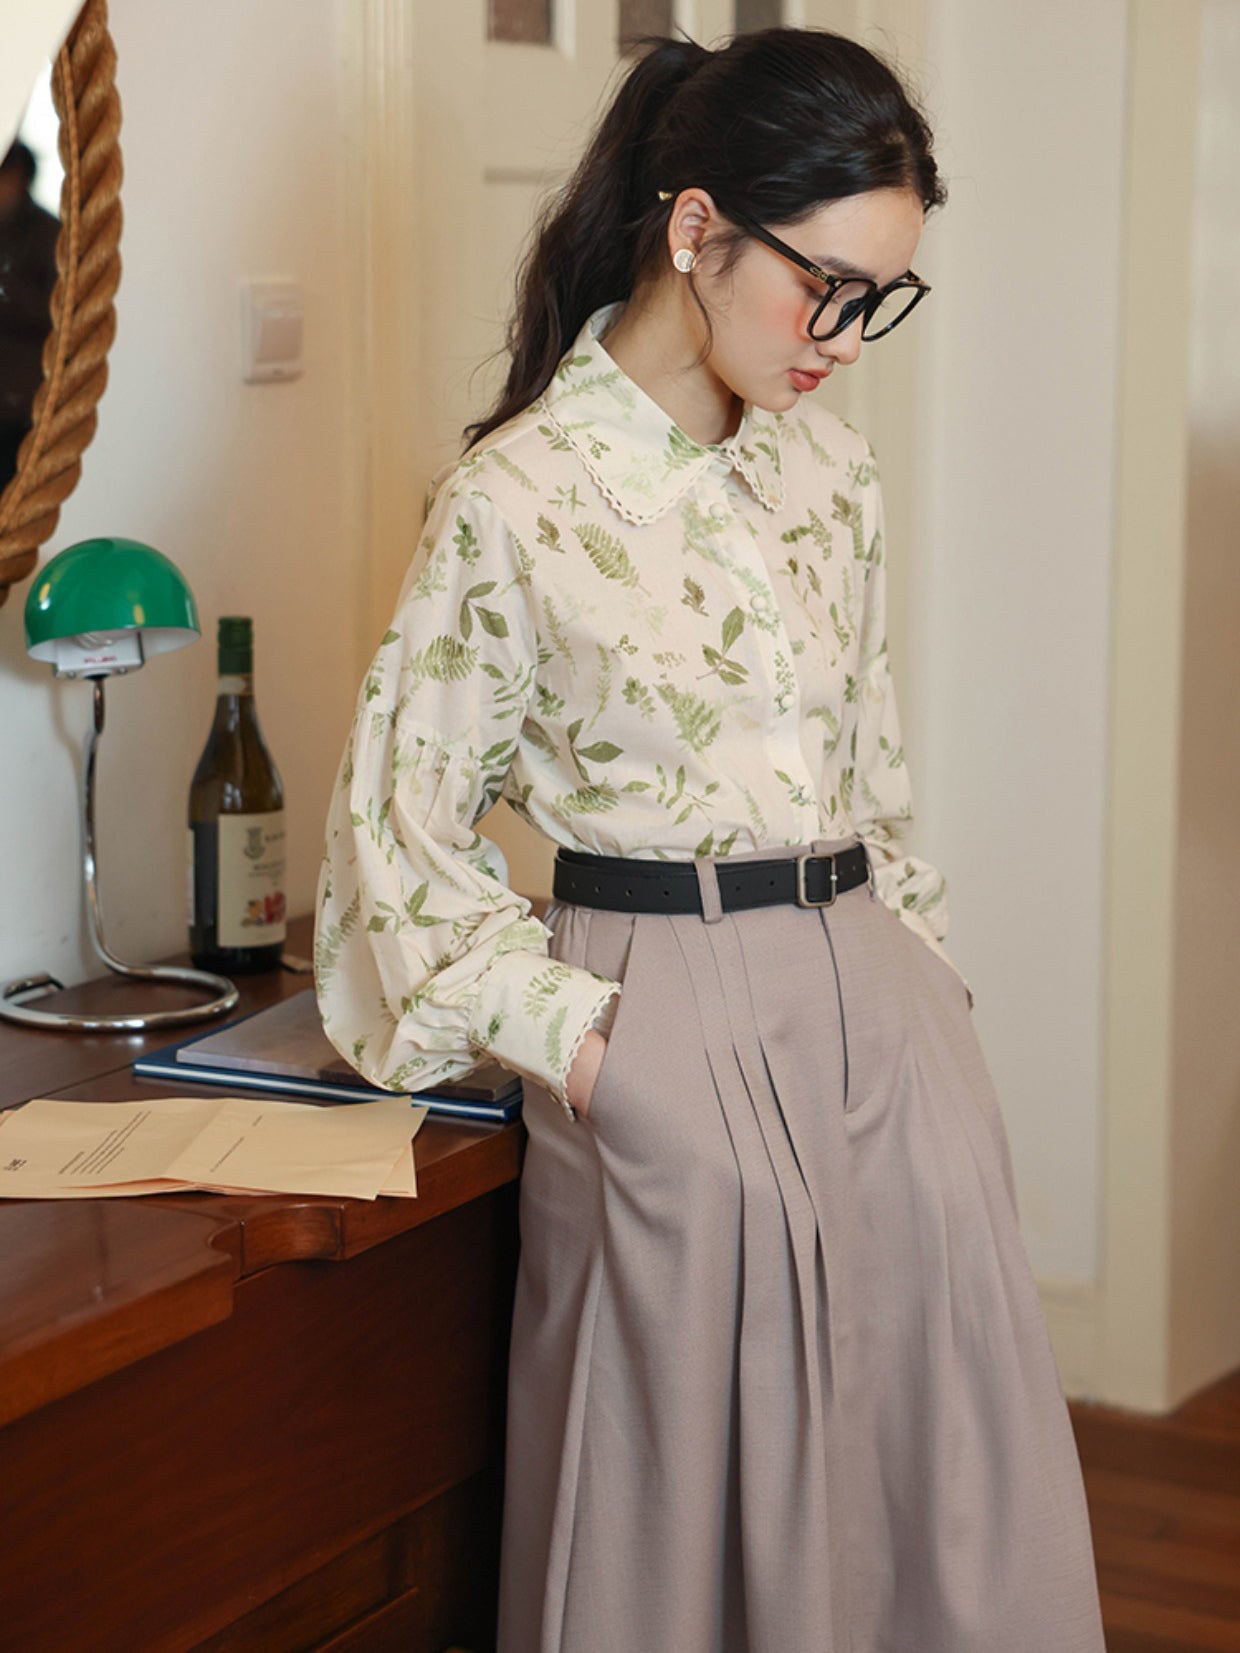 Evergreen pattern retro blouse